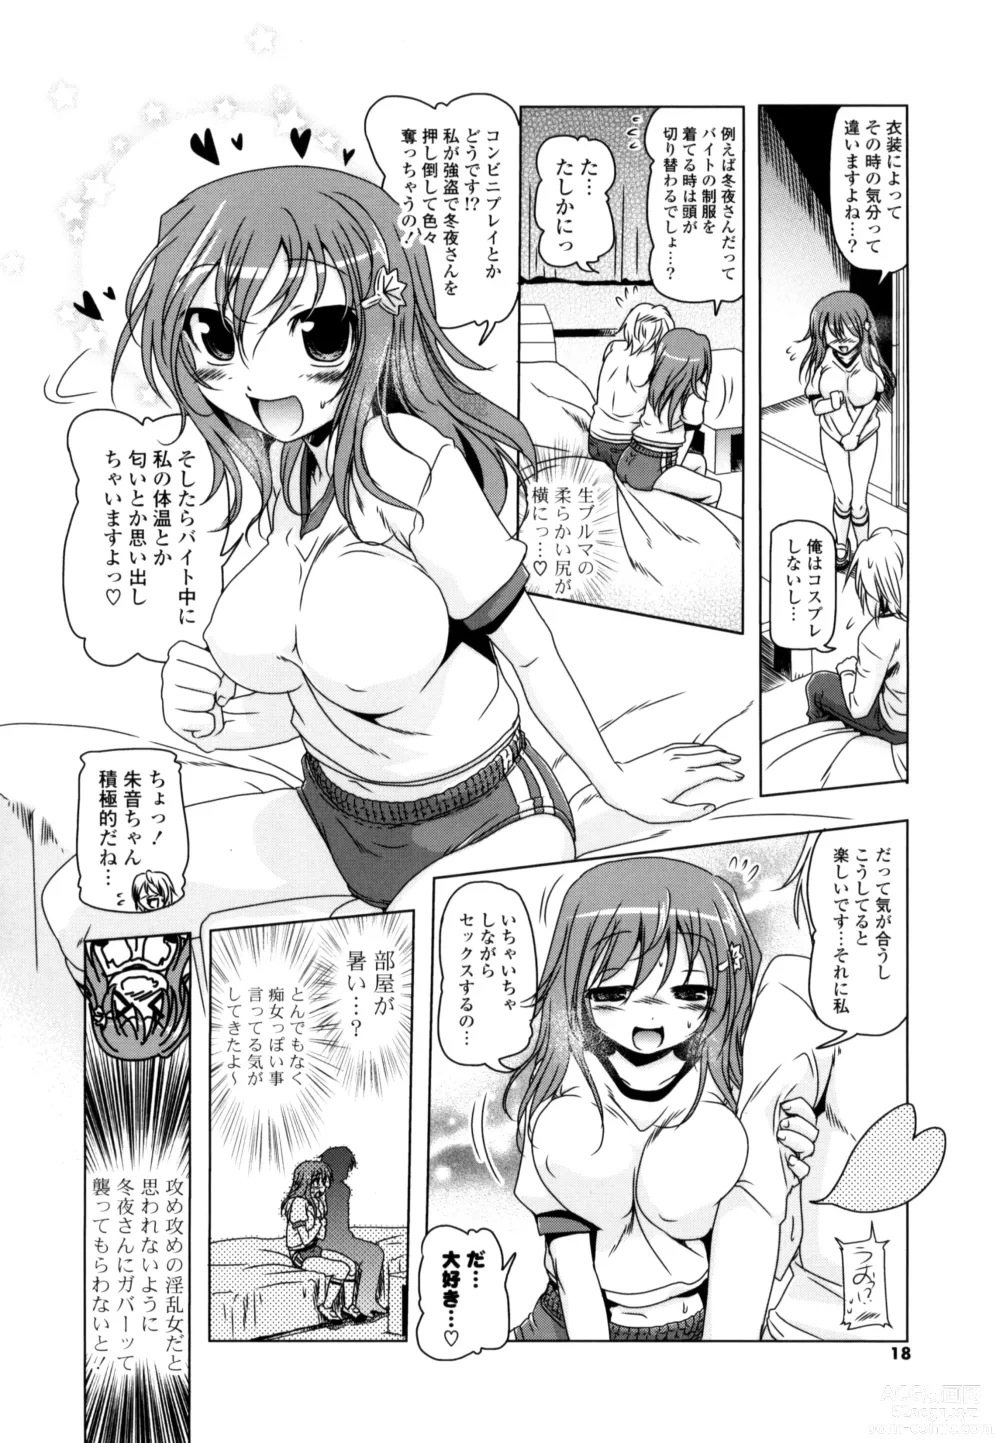 Page 16 of manga NAMA NAKA 100%!